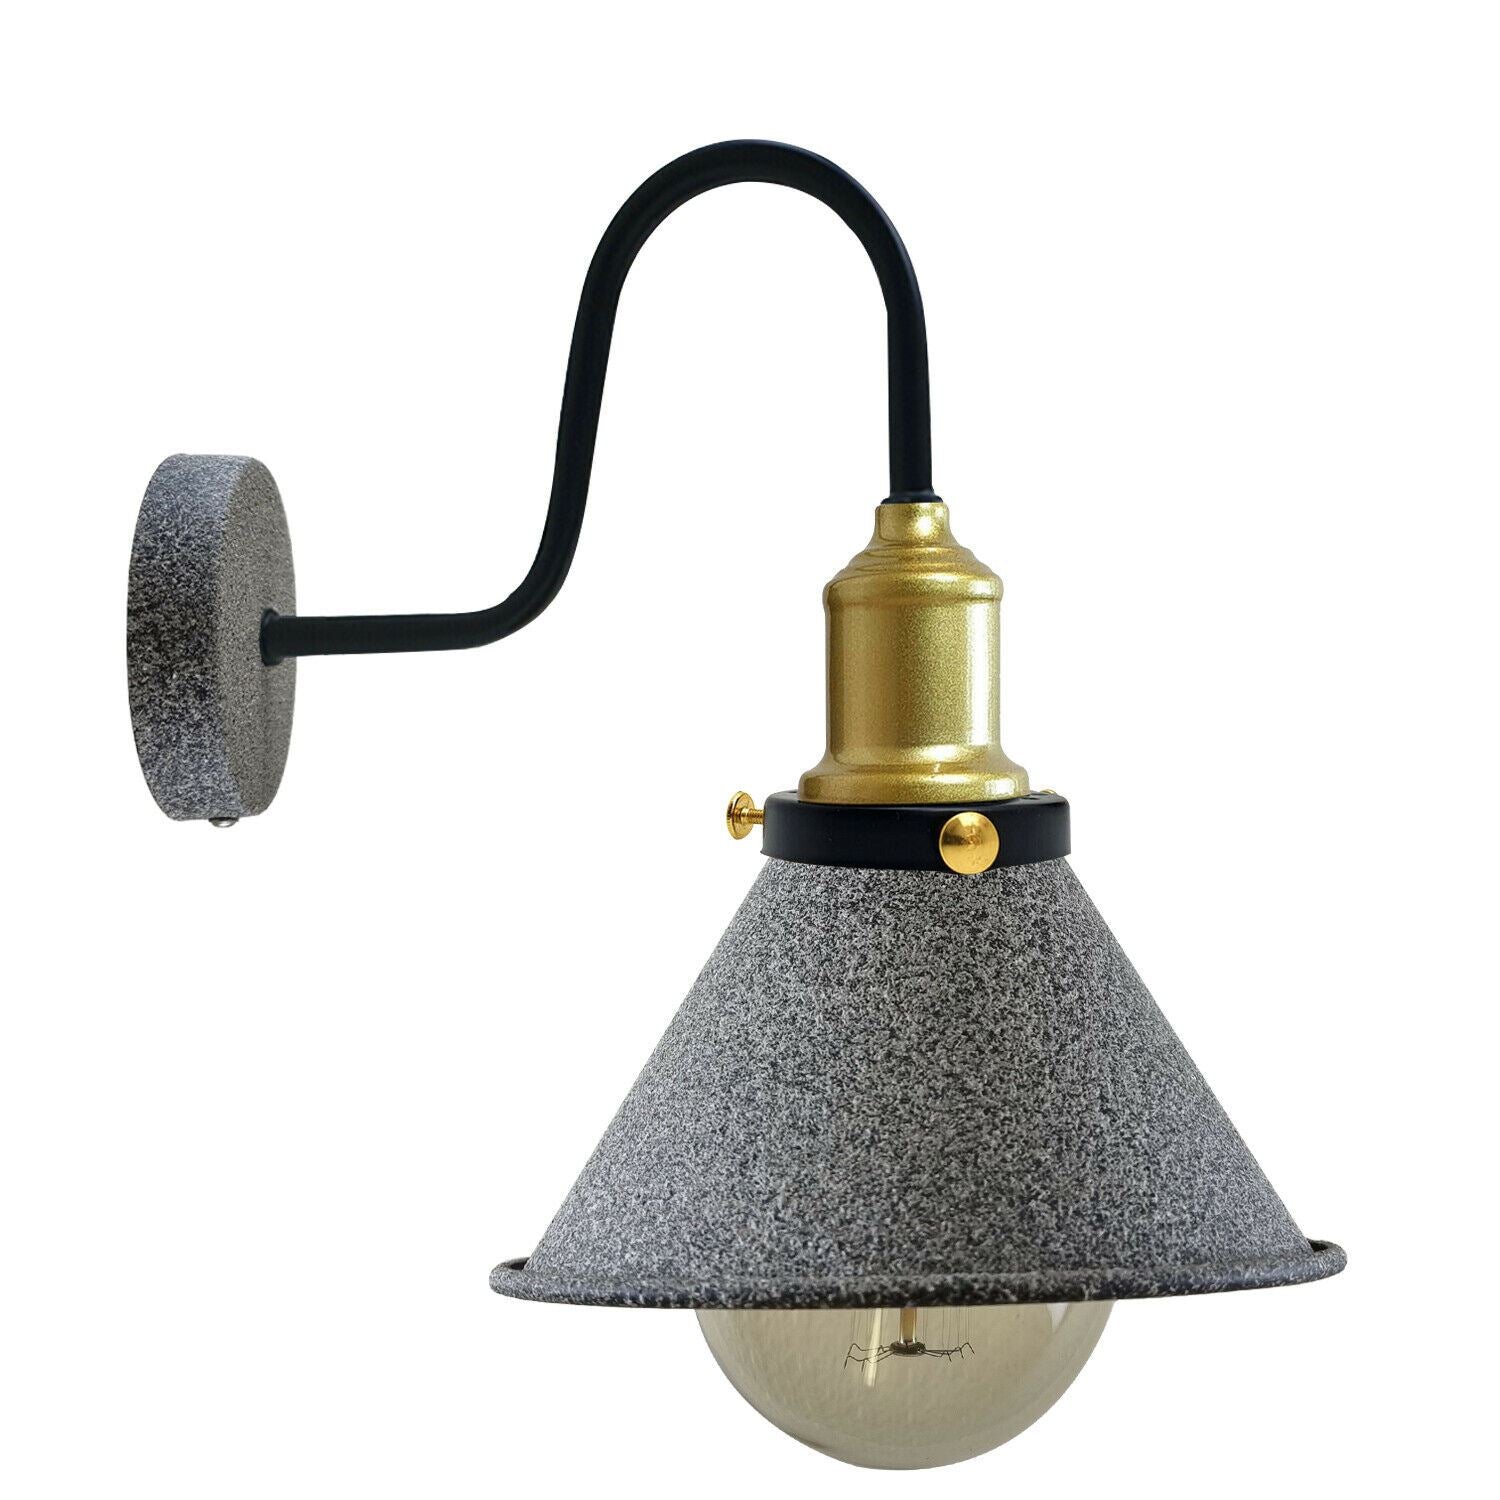 Modern Industrial Vintage Retro Rustic Sconce Wall Light Lamp Fitting Fixture UK~1201 - LEDSone UK Ltd